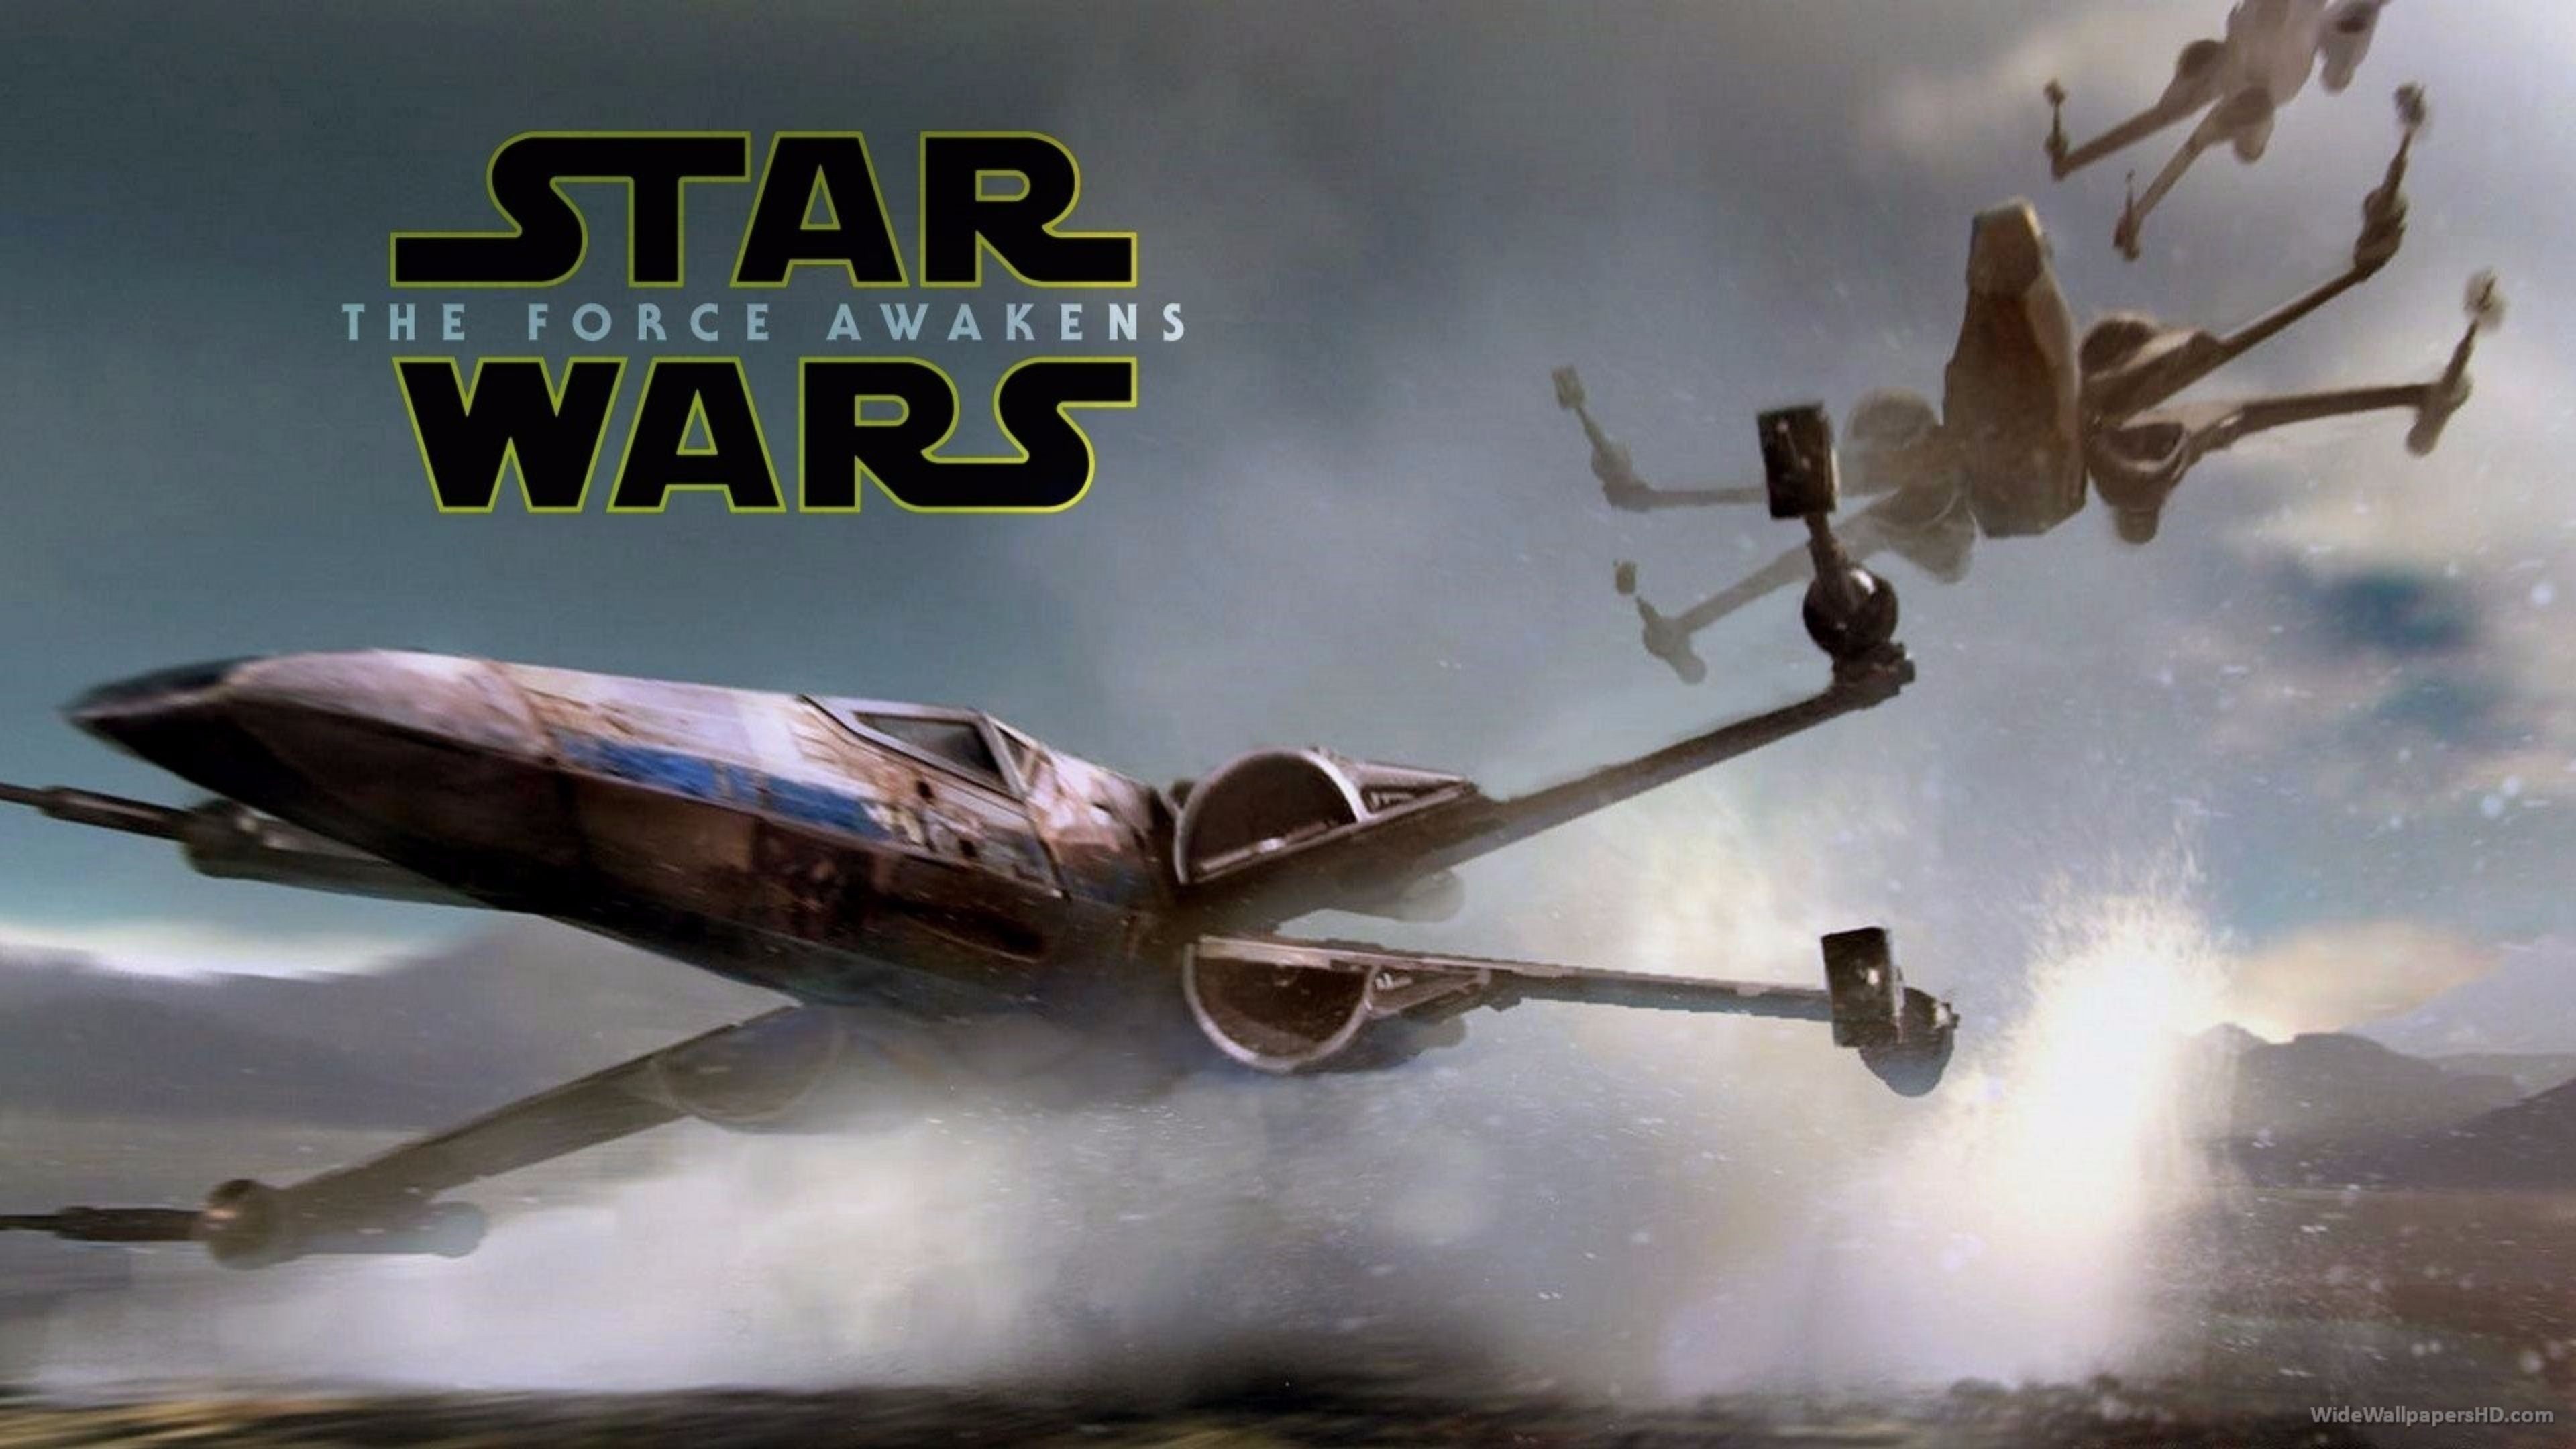 4K Star Wars wallpaper ·① Download free stunning full HD ...